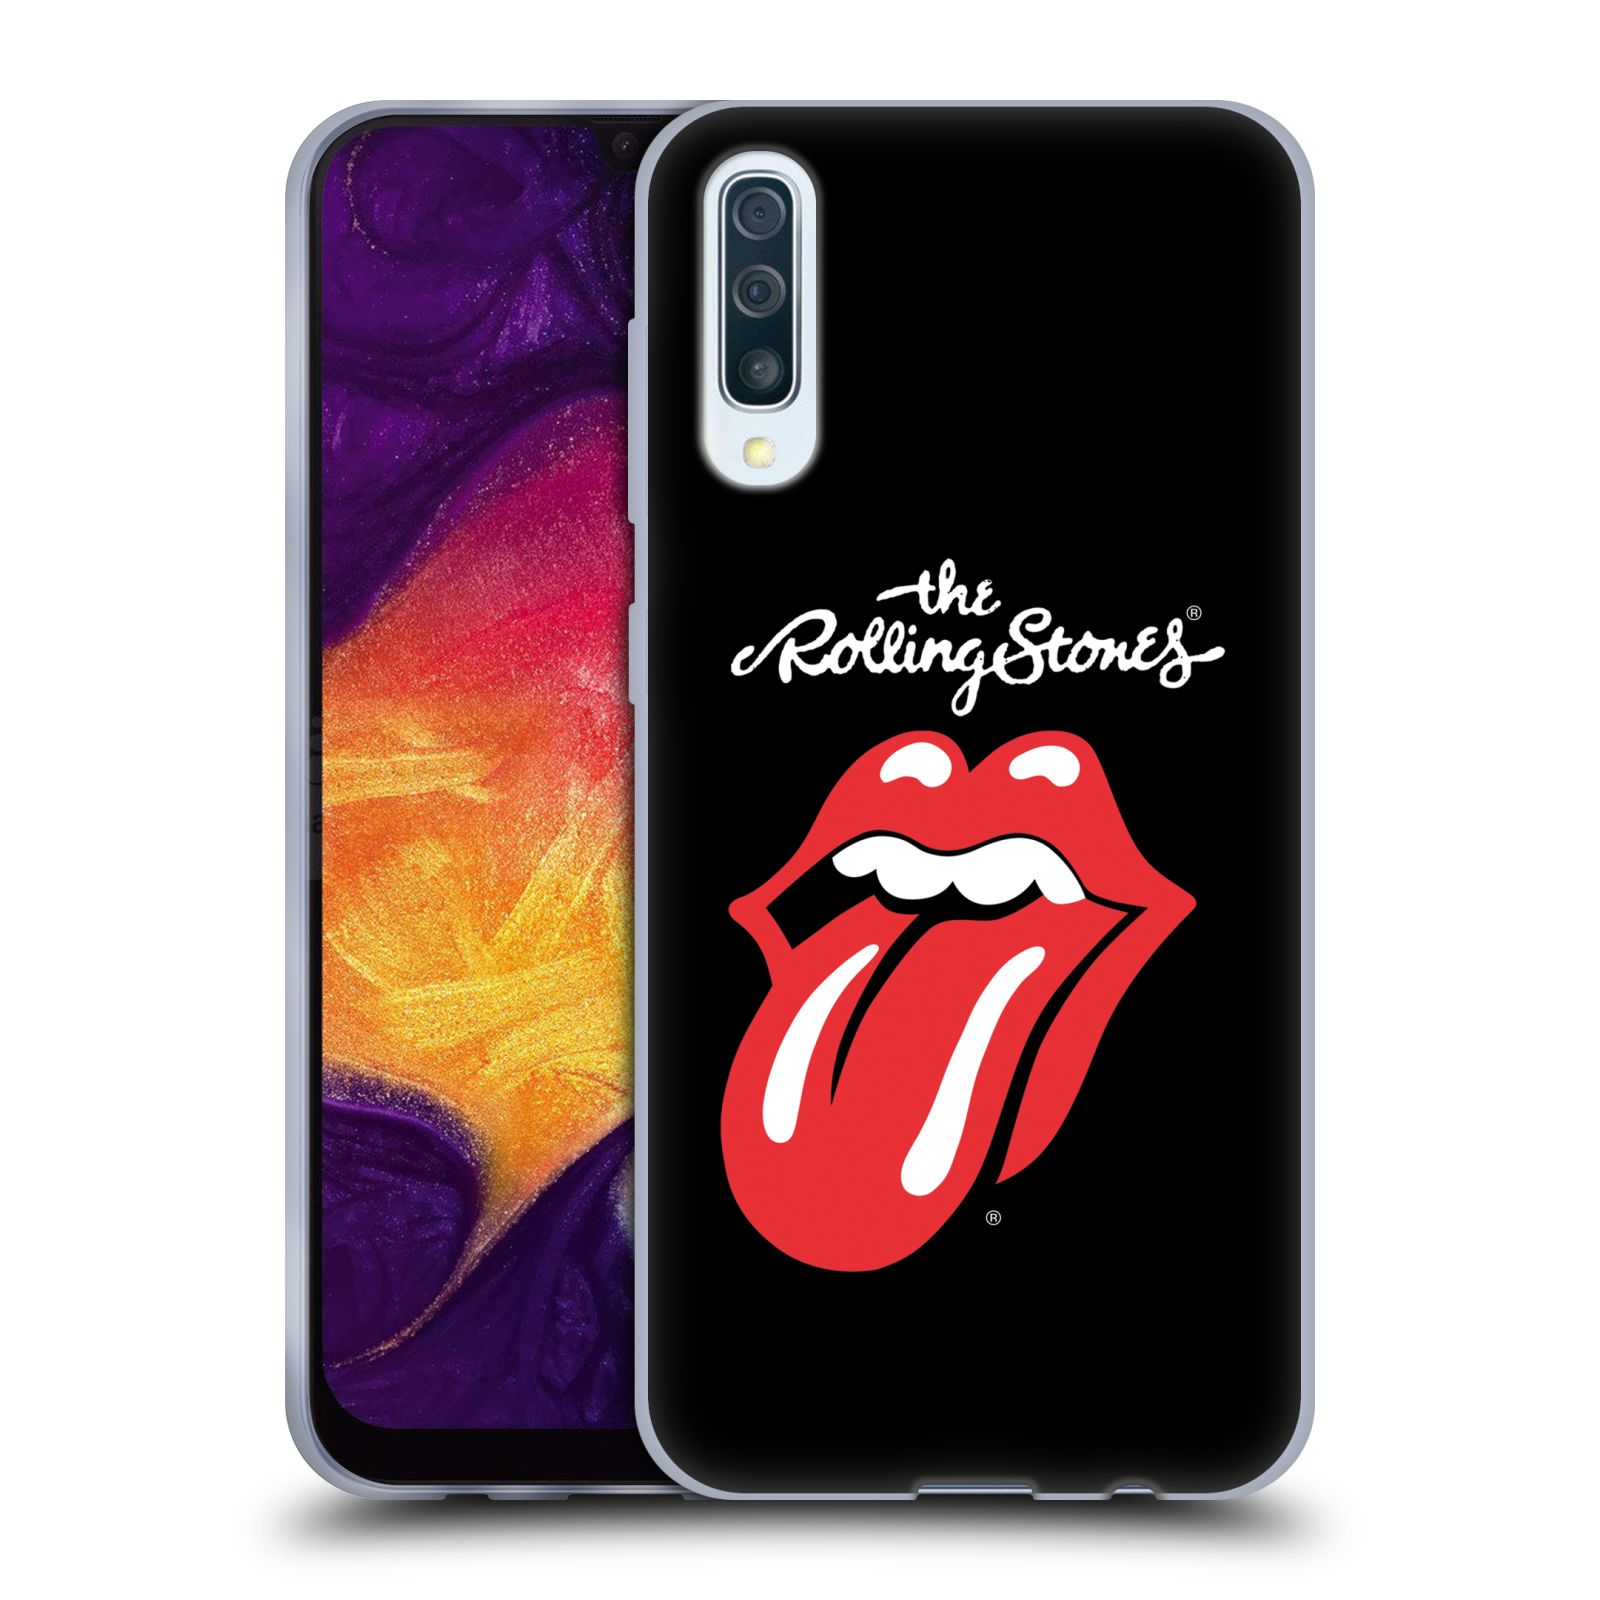 Silikonové pouzdro na mobil Samsung Galaxy A50 / A30s - Head Case - The Rolling Stones - Classic Lick (Silikonový kryt, obal, pouzdro na mobilní telefon Samsung Galaxy A50 / A30s z roku 2019 s motivem The Rolling Stones - Classic Lick)